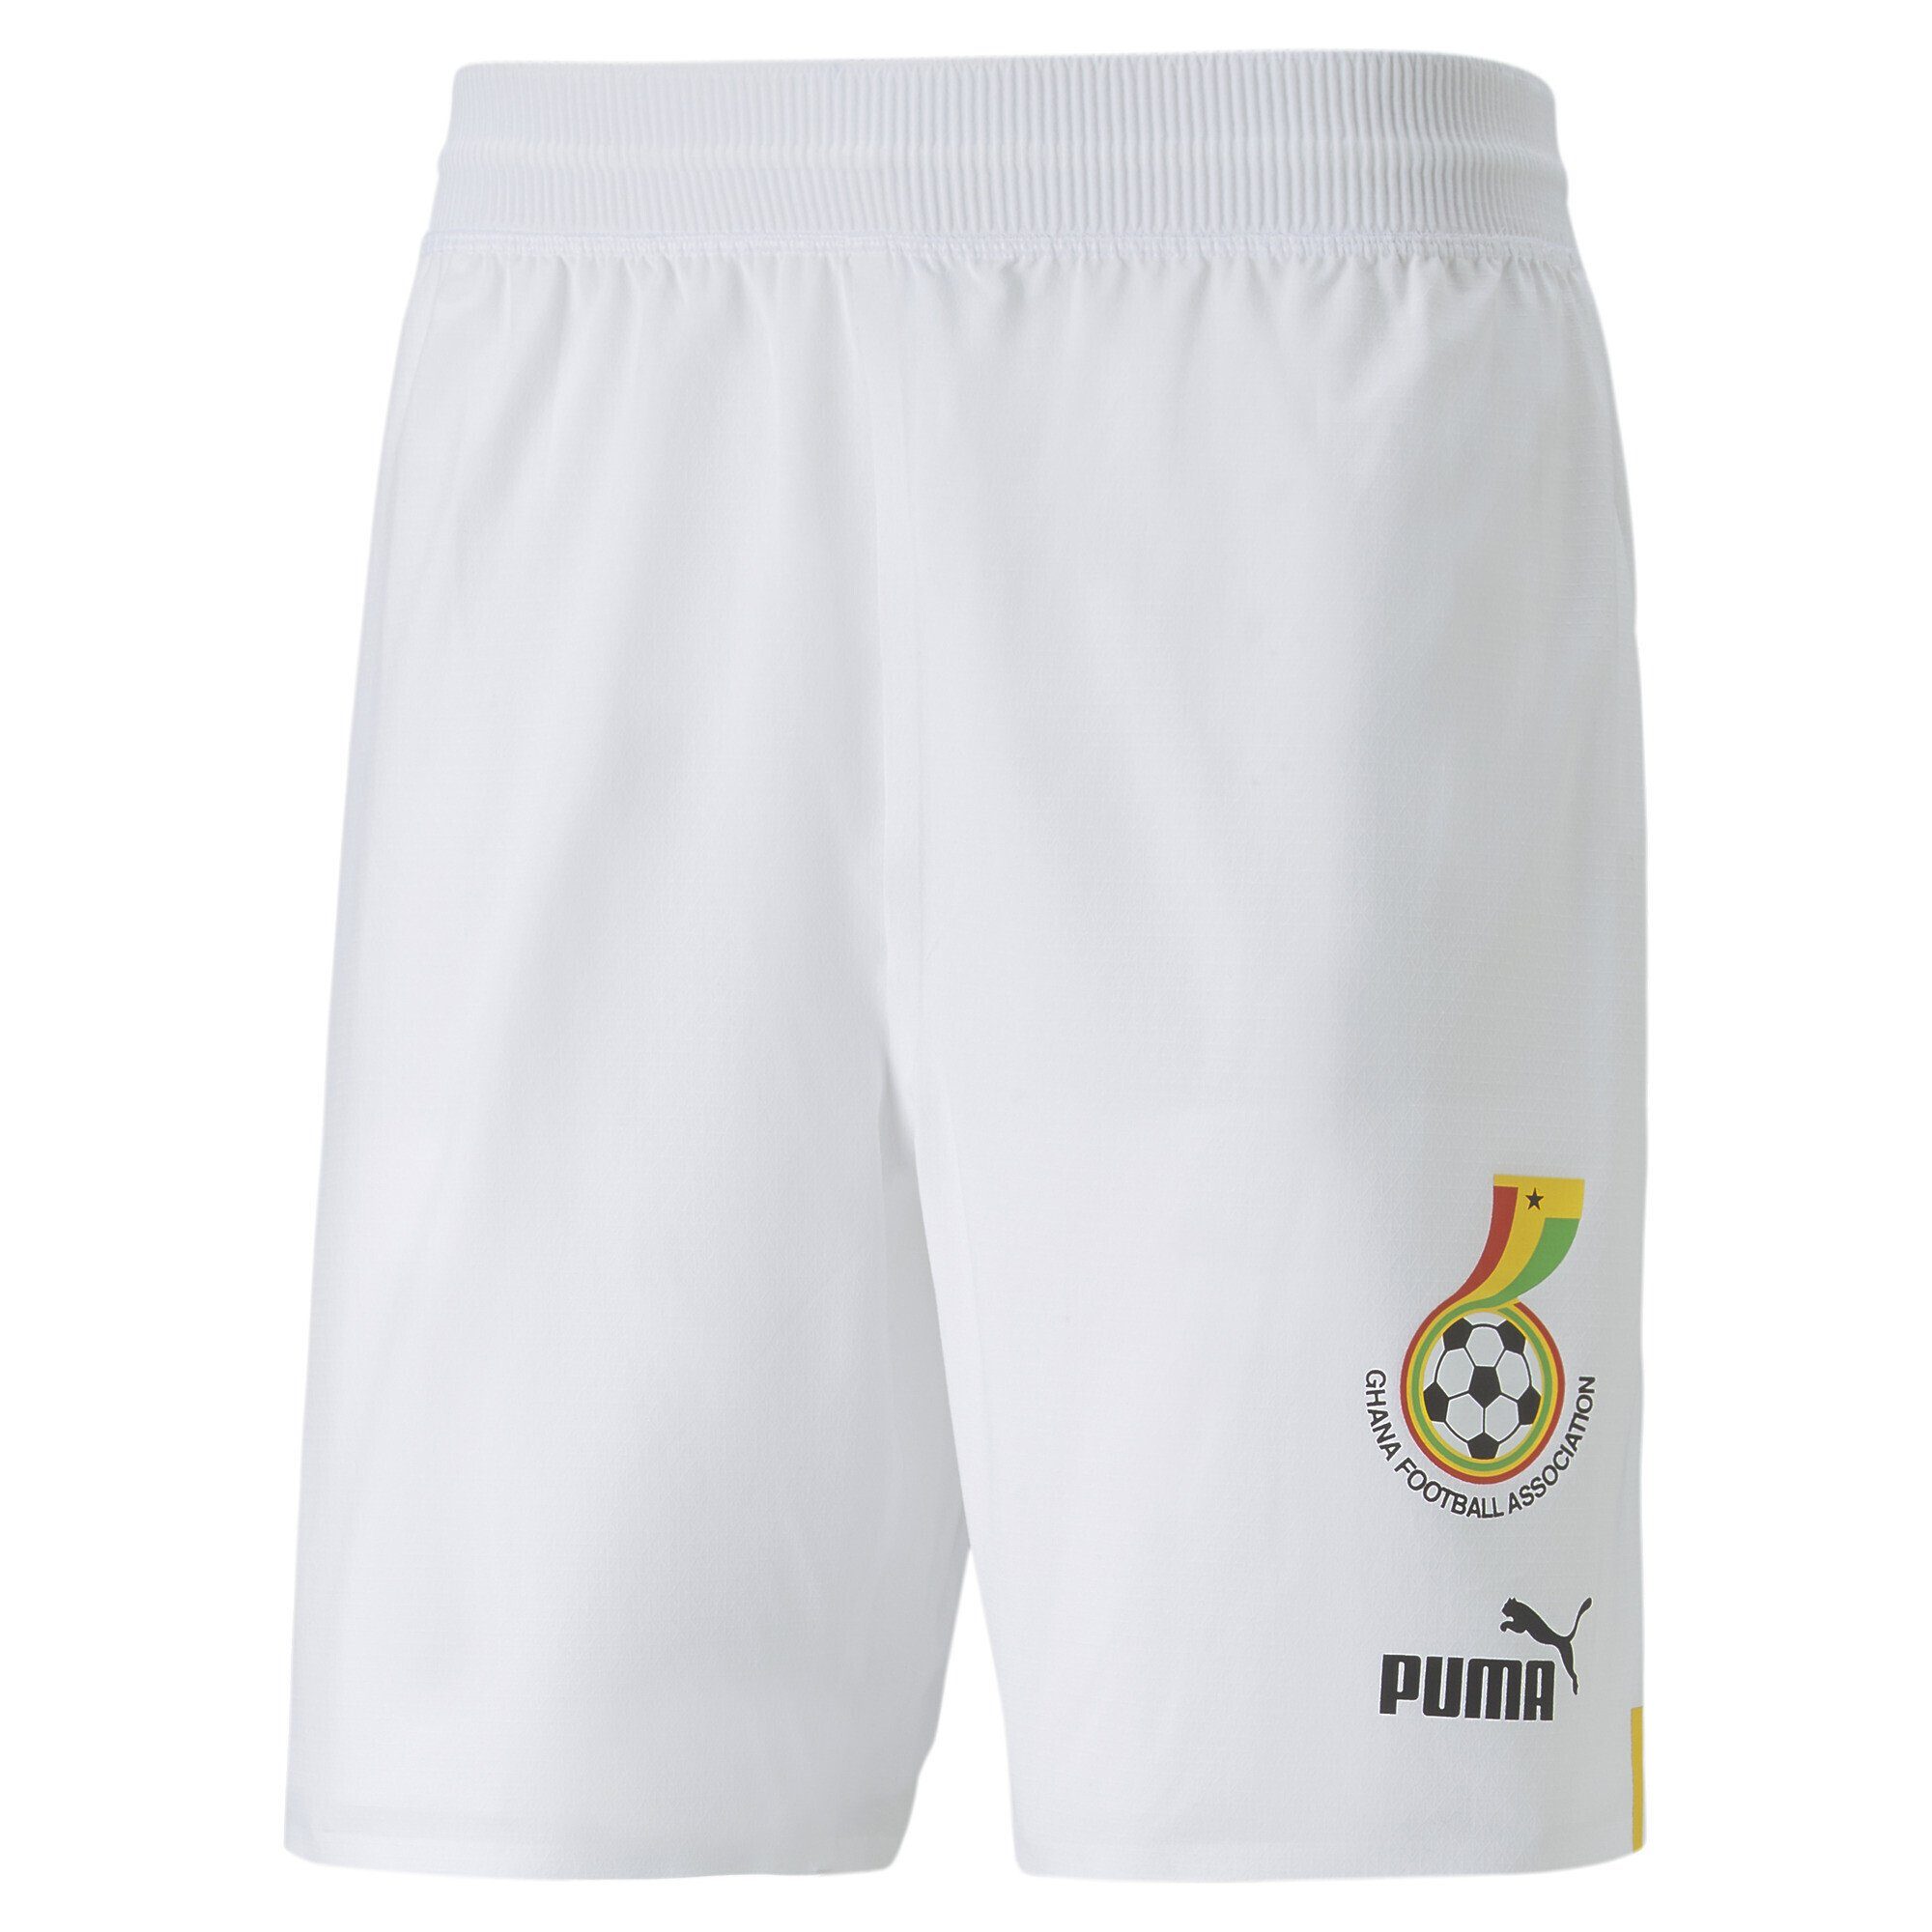 PUMA Shorts Ghana 22/23 Promo Shorts Herren